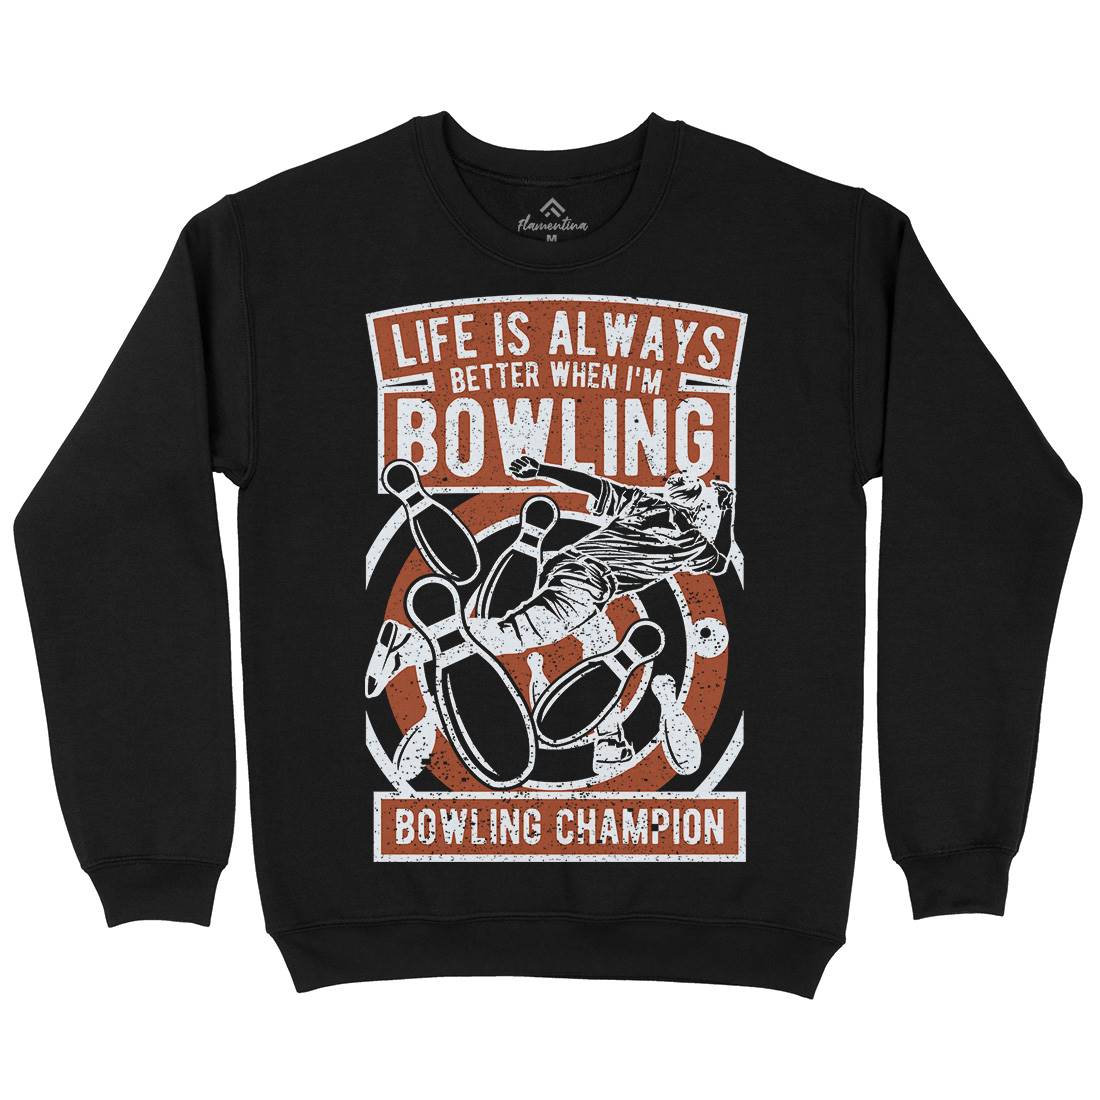 Bowling Champion Kids Crew Neck Sweatshirt Sport A625